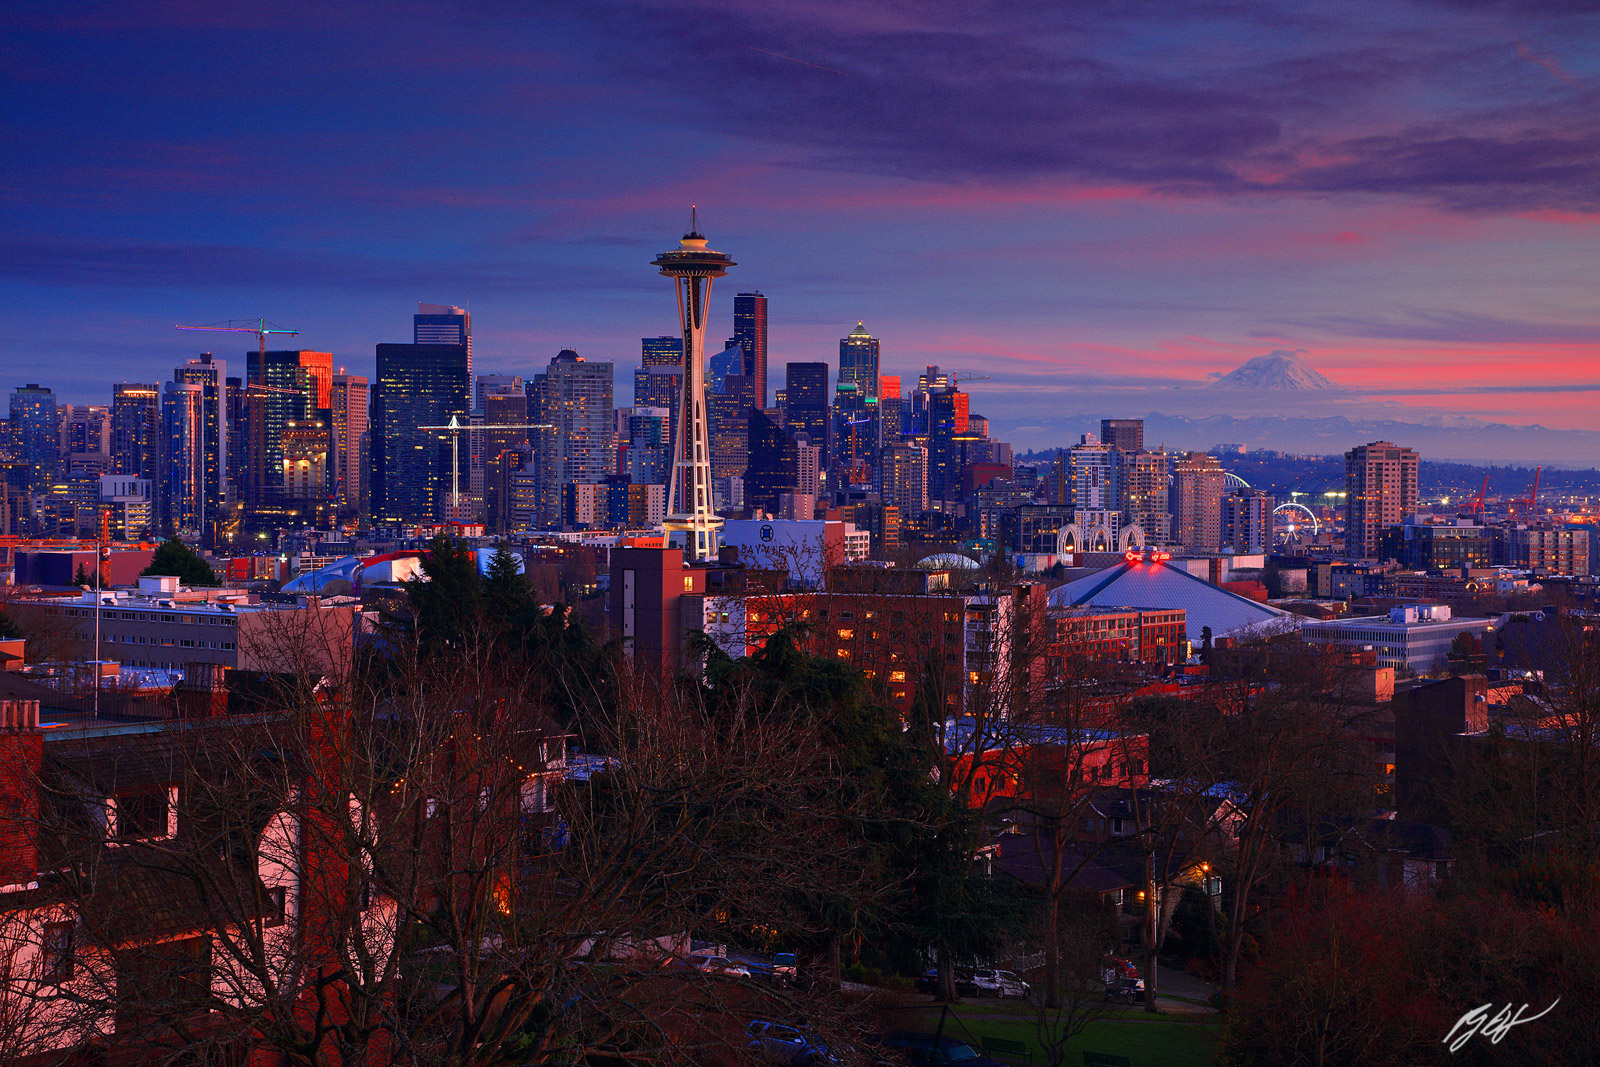 Sunset Seattle Skyline from Kerry Park on Queen Ann Hill in Seattle, Washington